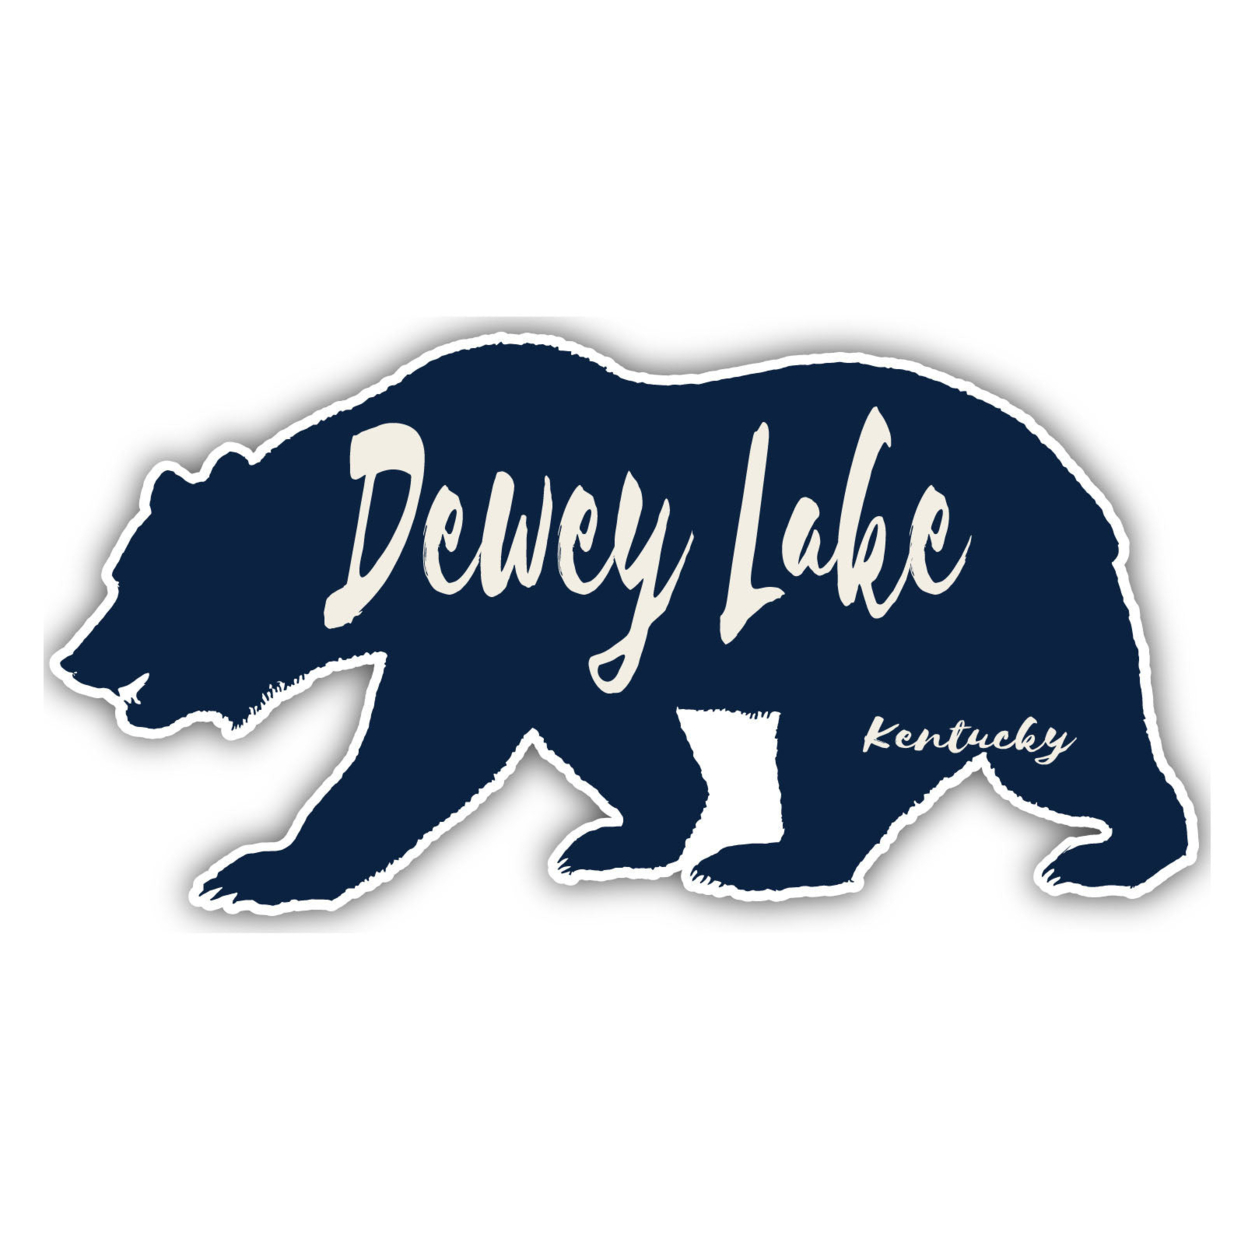 Dewey Lake Kentucky Souvenir Decorative Stickers (Choose Theme And Size) - 4-Pack, 8-Inch, Bear